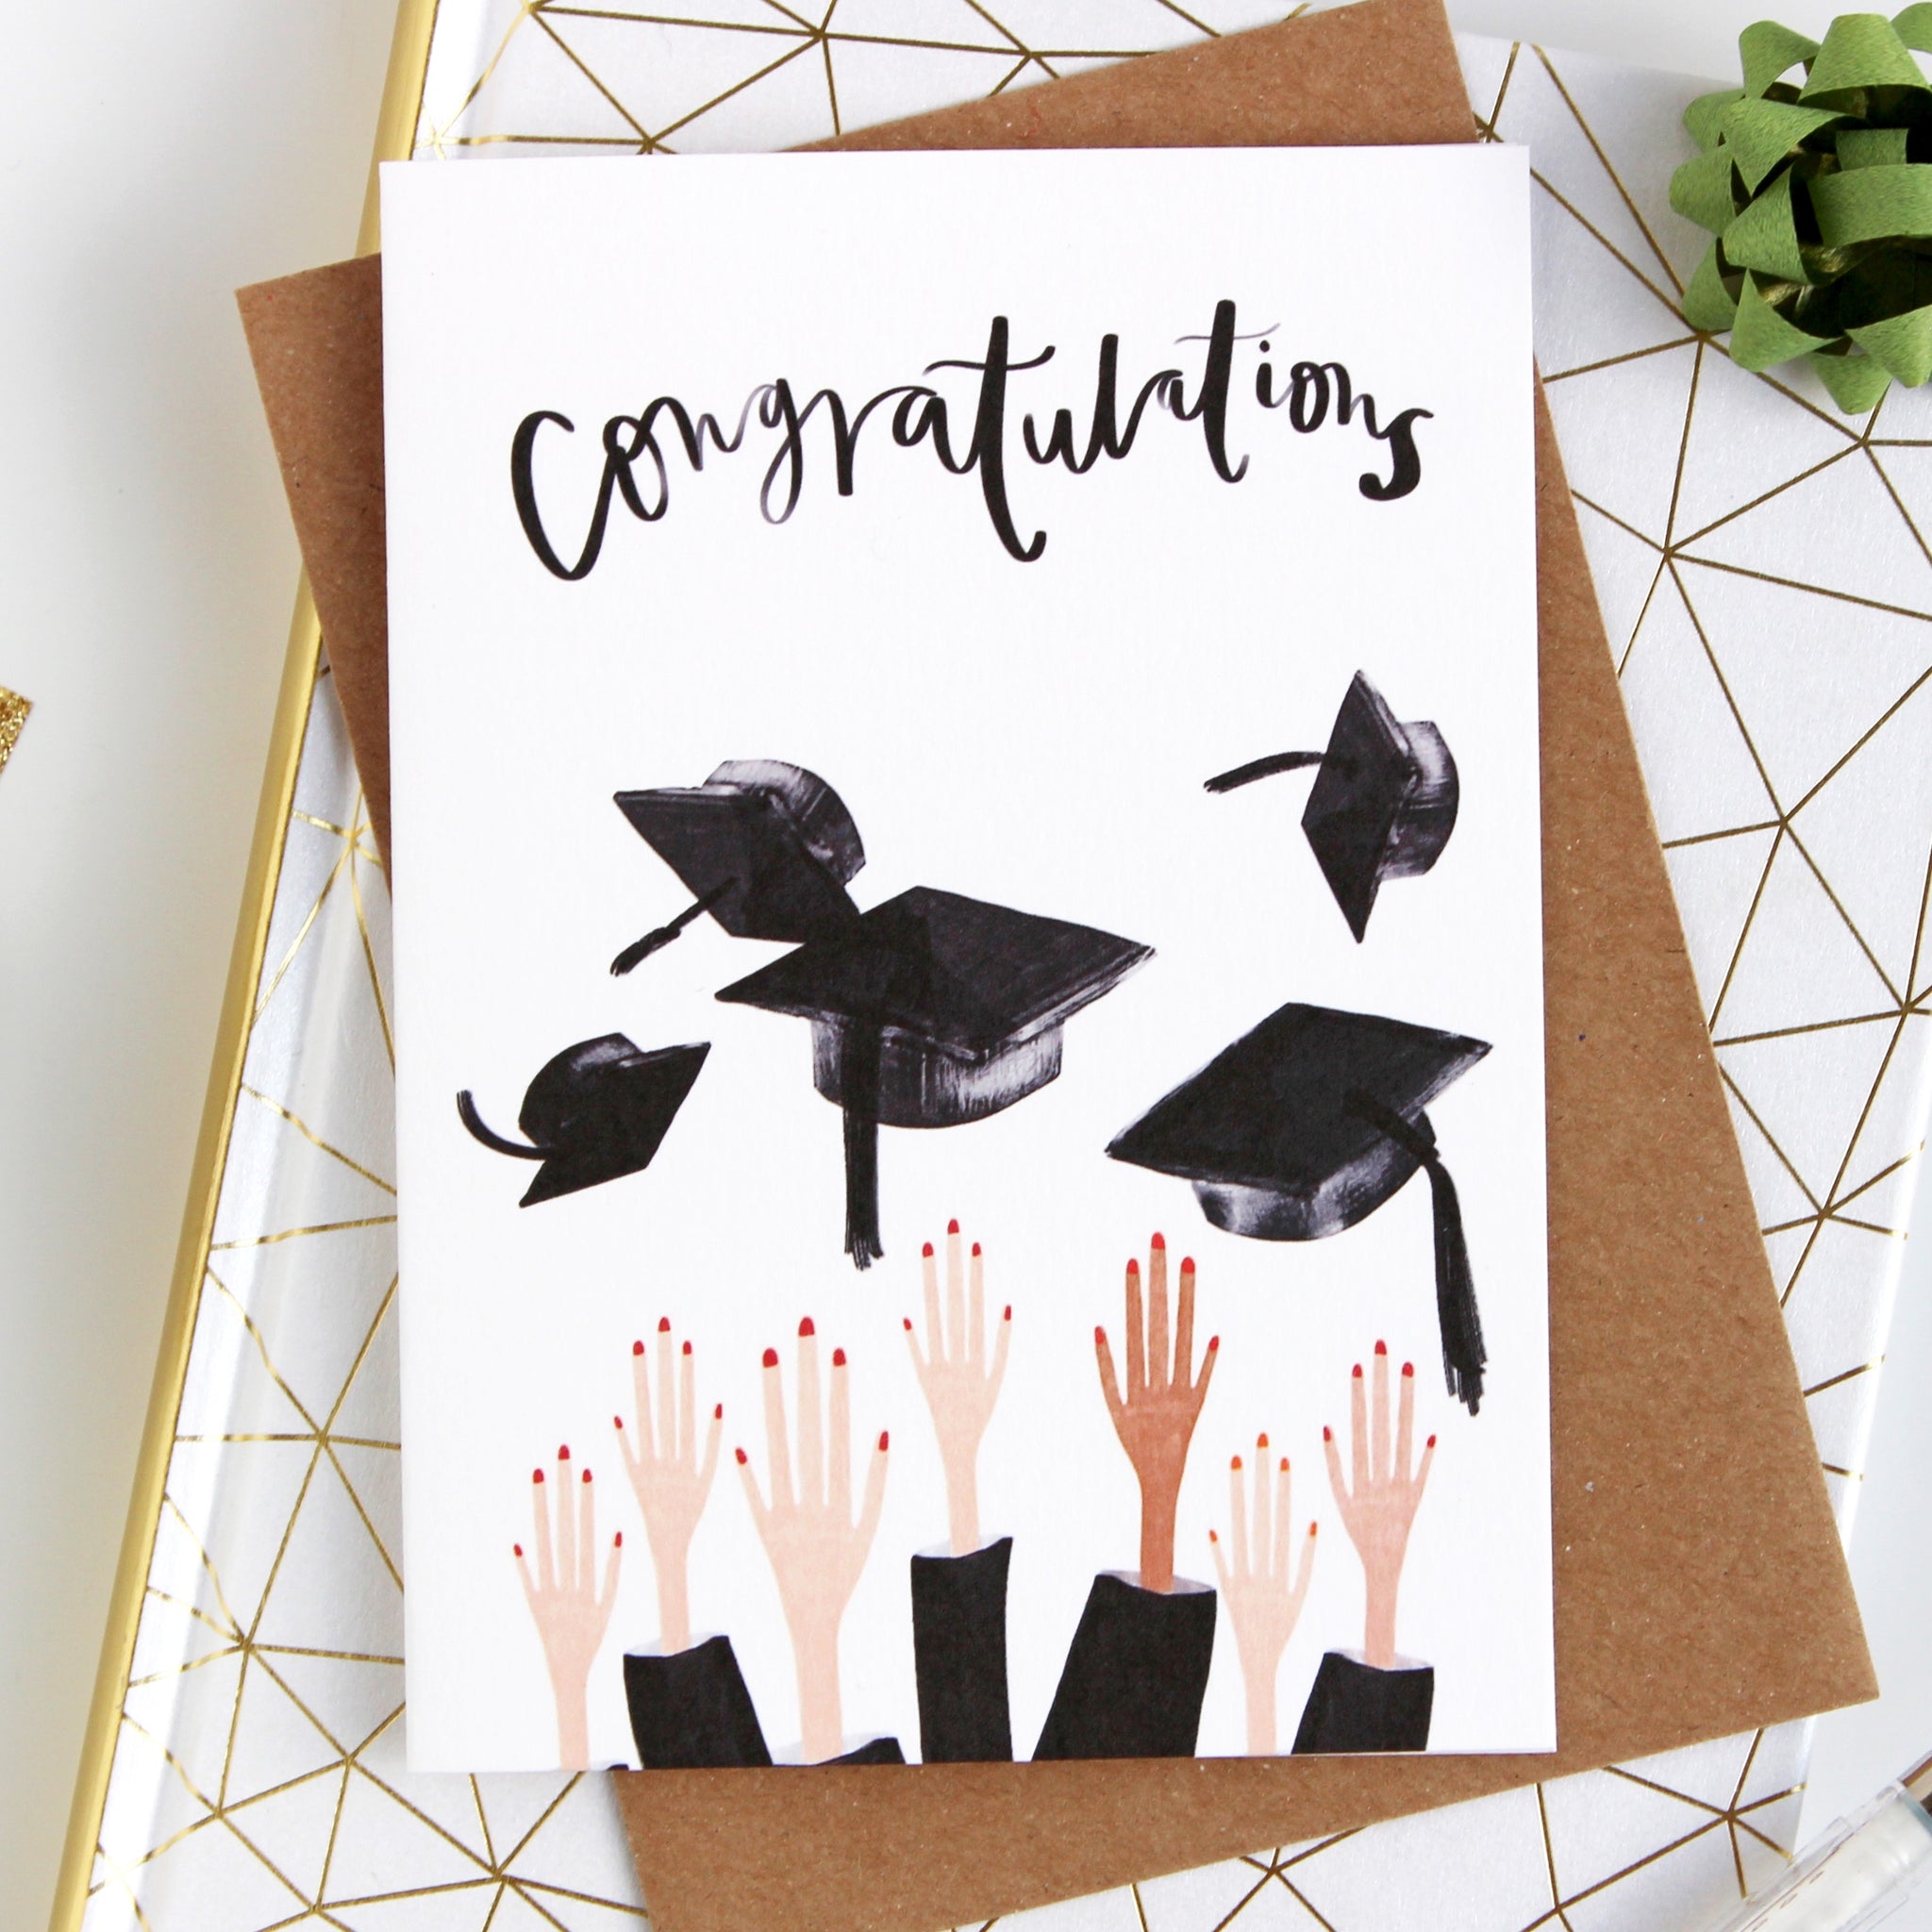 graduation-congratulations-card-gifts-katy-pillinger-designs